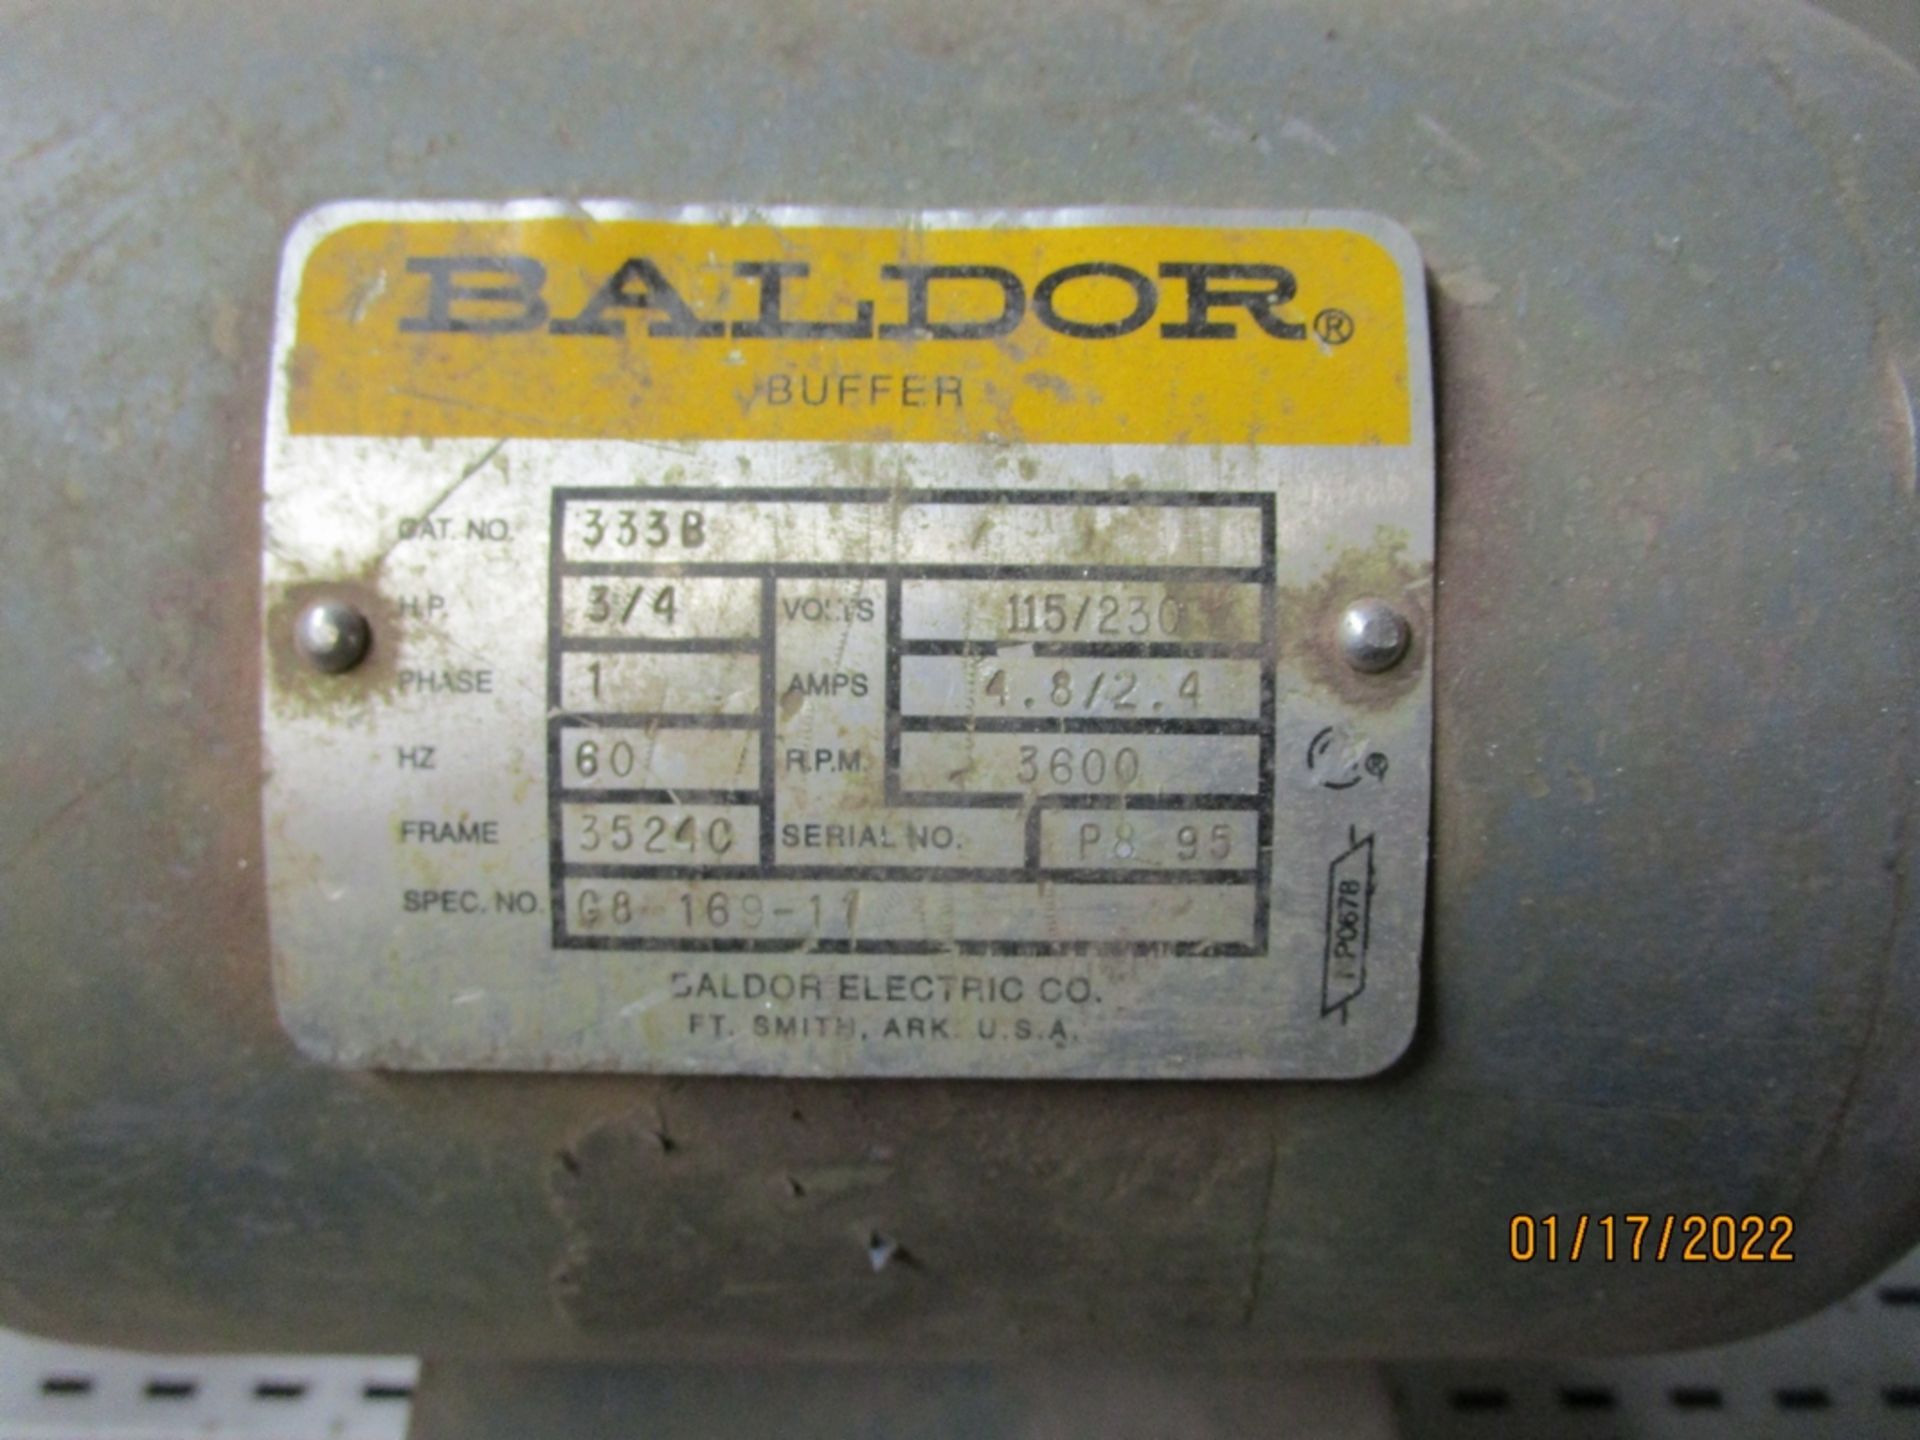 Baldor No. 3338 Double End Buffer - Image 2 of 6